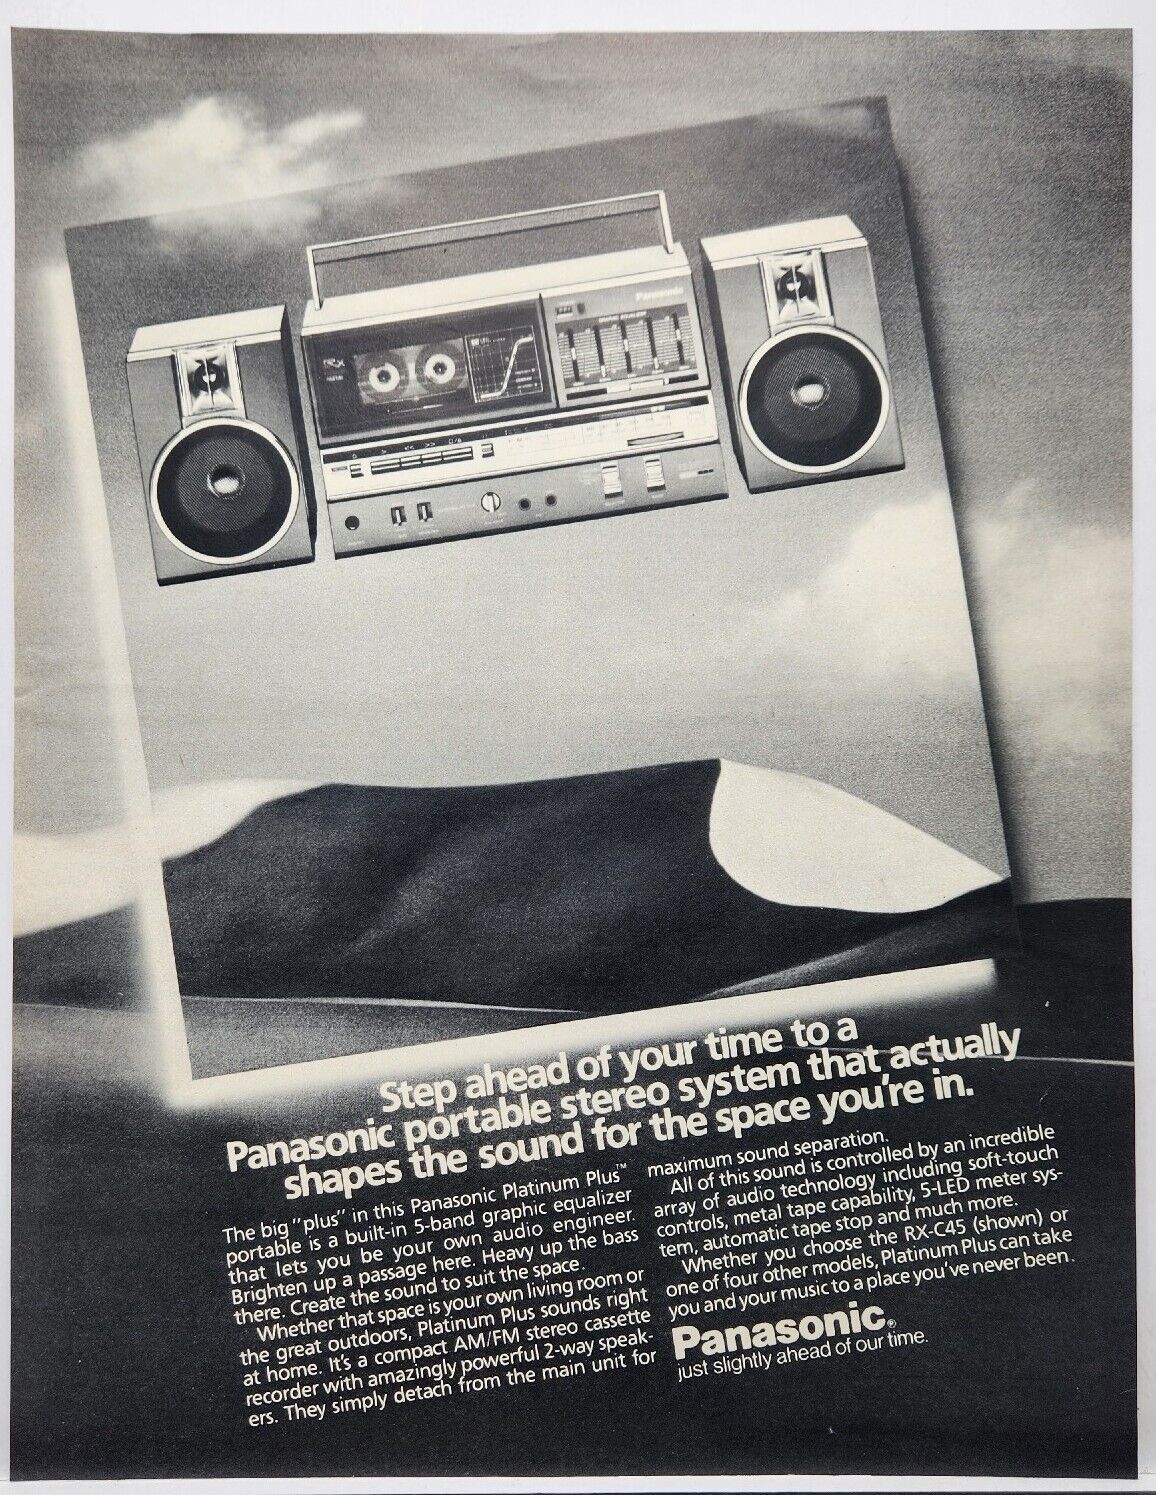 1983 Panasonic Boom Box Platinum Plus Radio Cassette Tape Vintage Print Ad